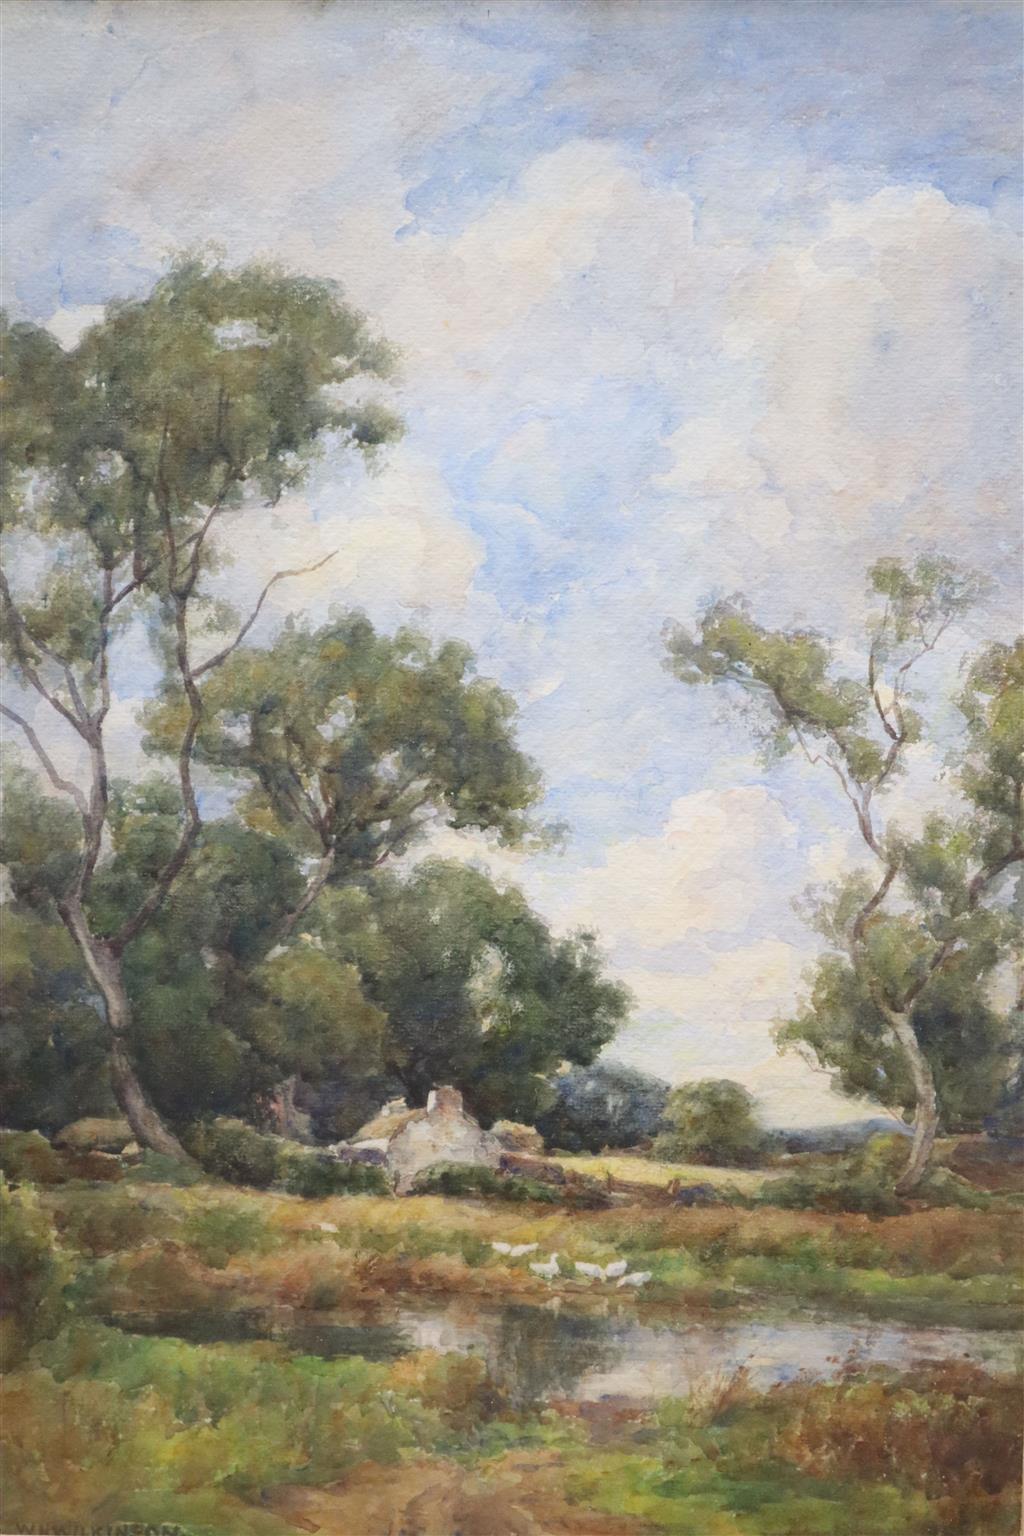 W. H. Wilkinson (1856-1934), watercolour, Geese in a landscape, 47 x 32cm